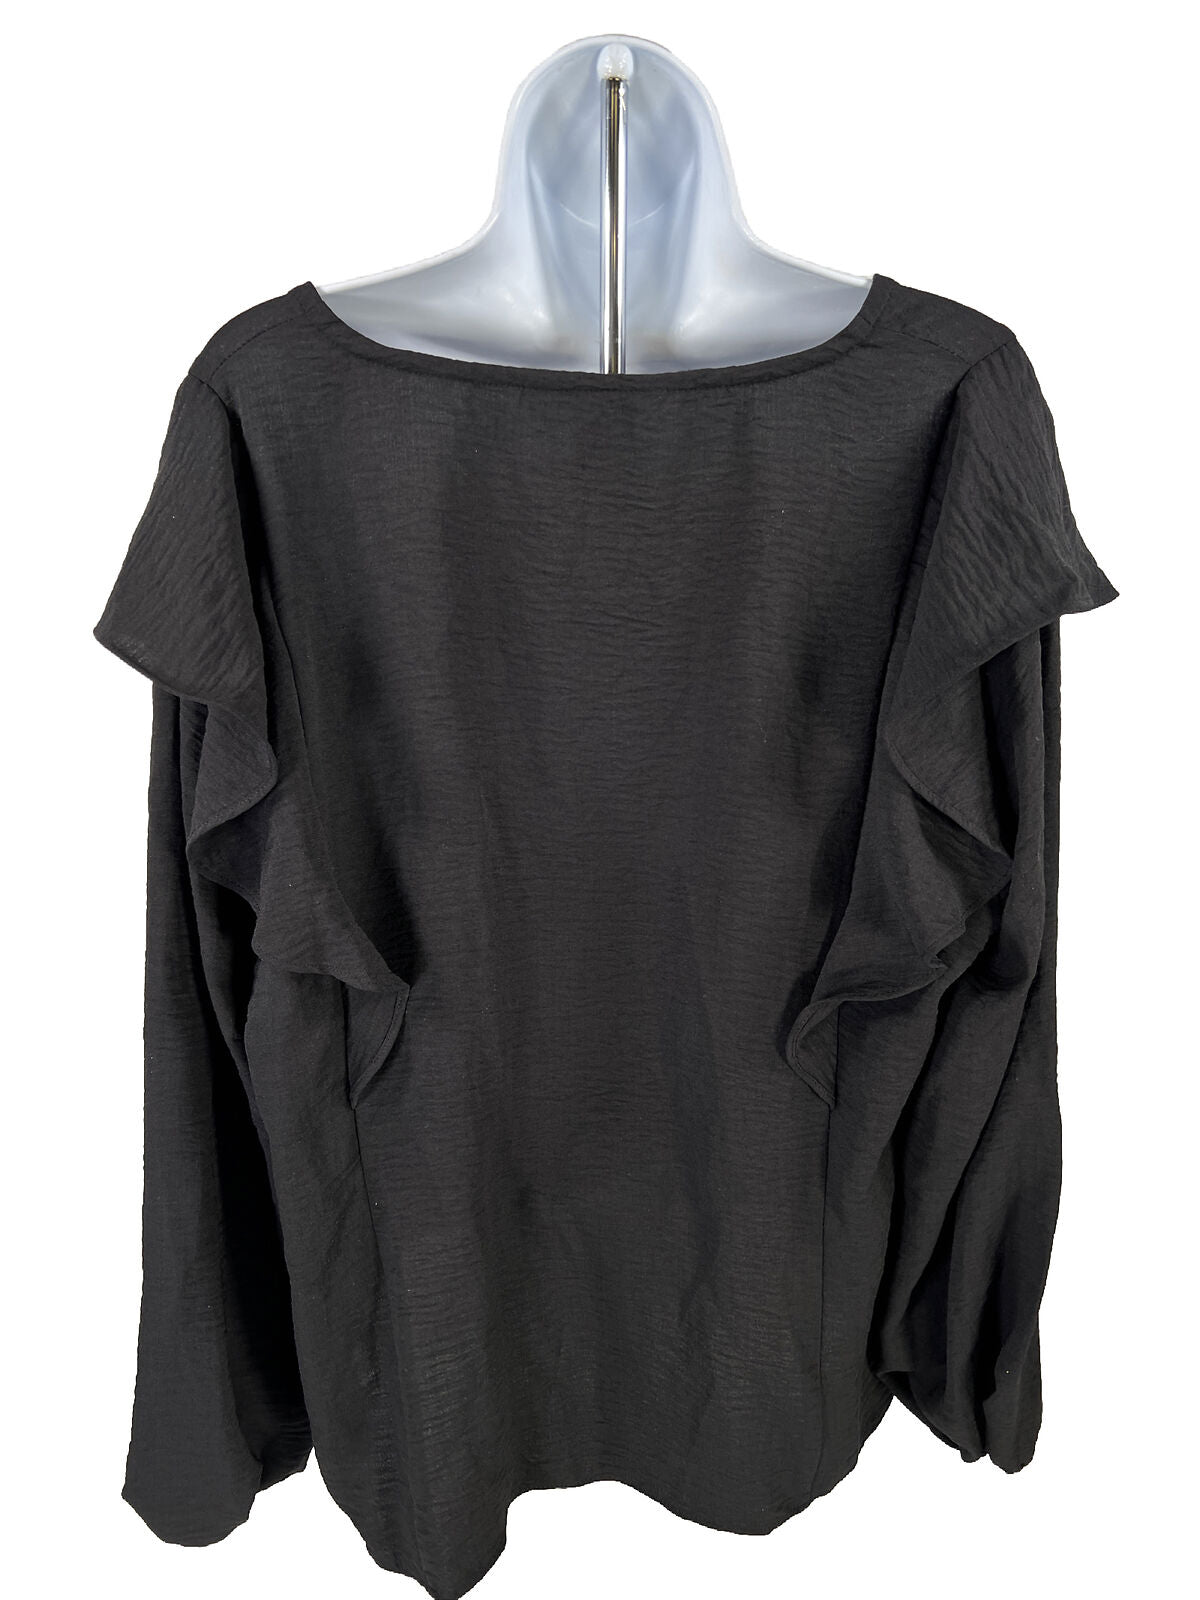 NEW Nine West Women's Black Ruffle Front Long Sleeve Blouse - XL